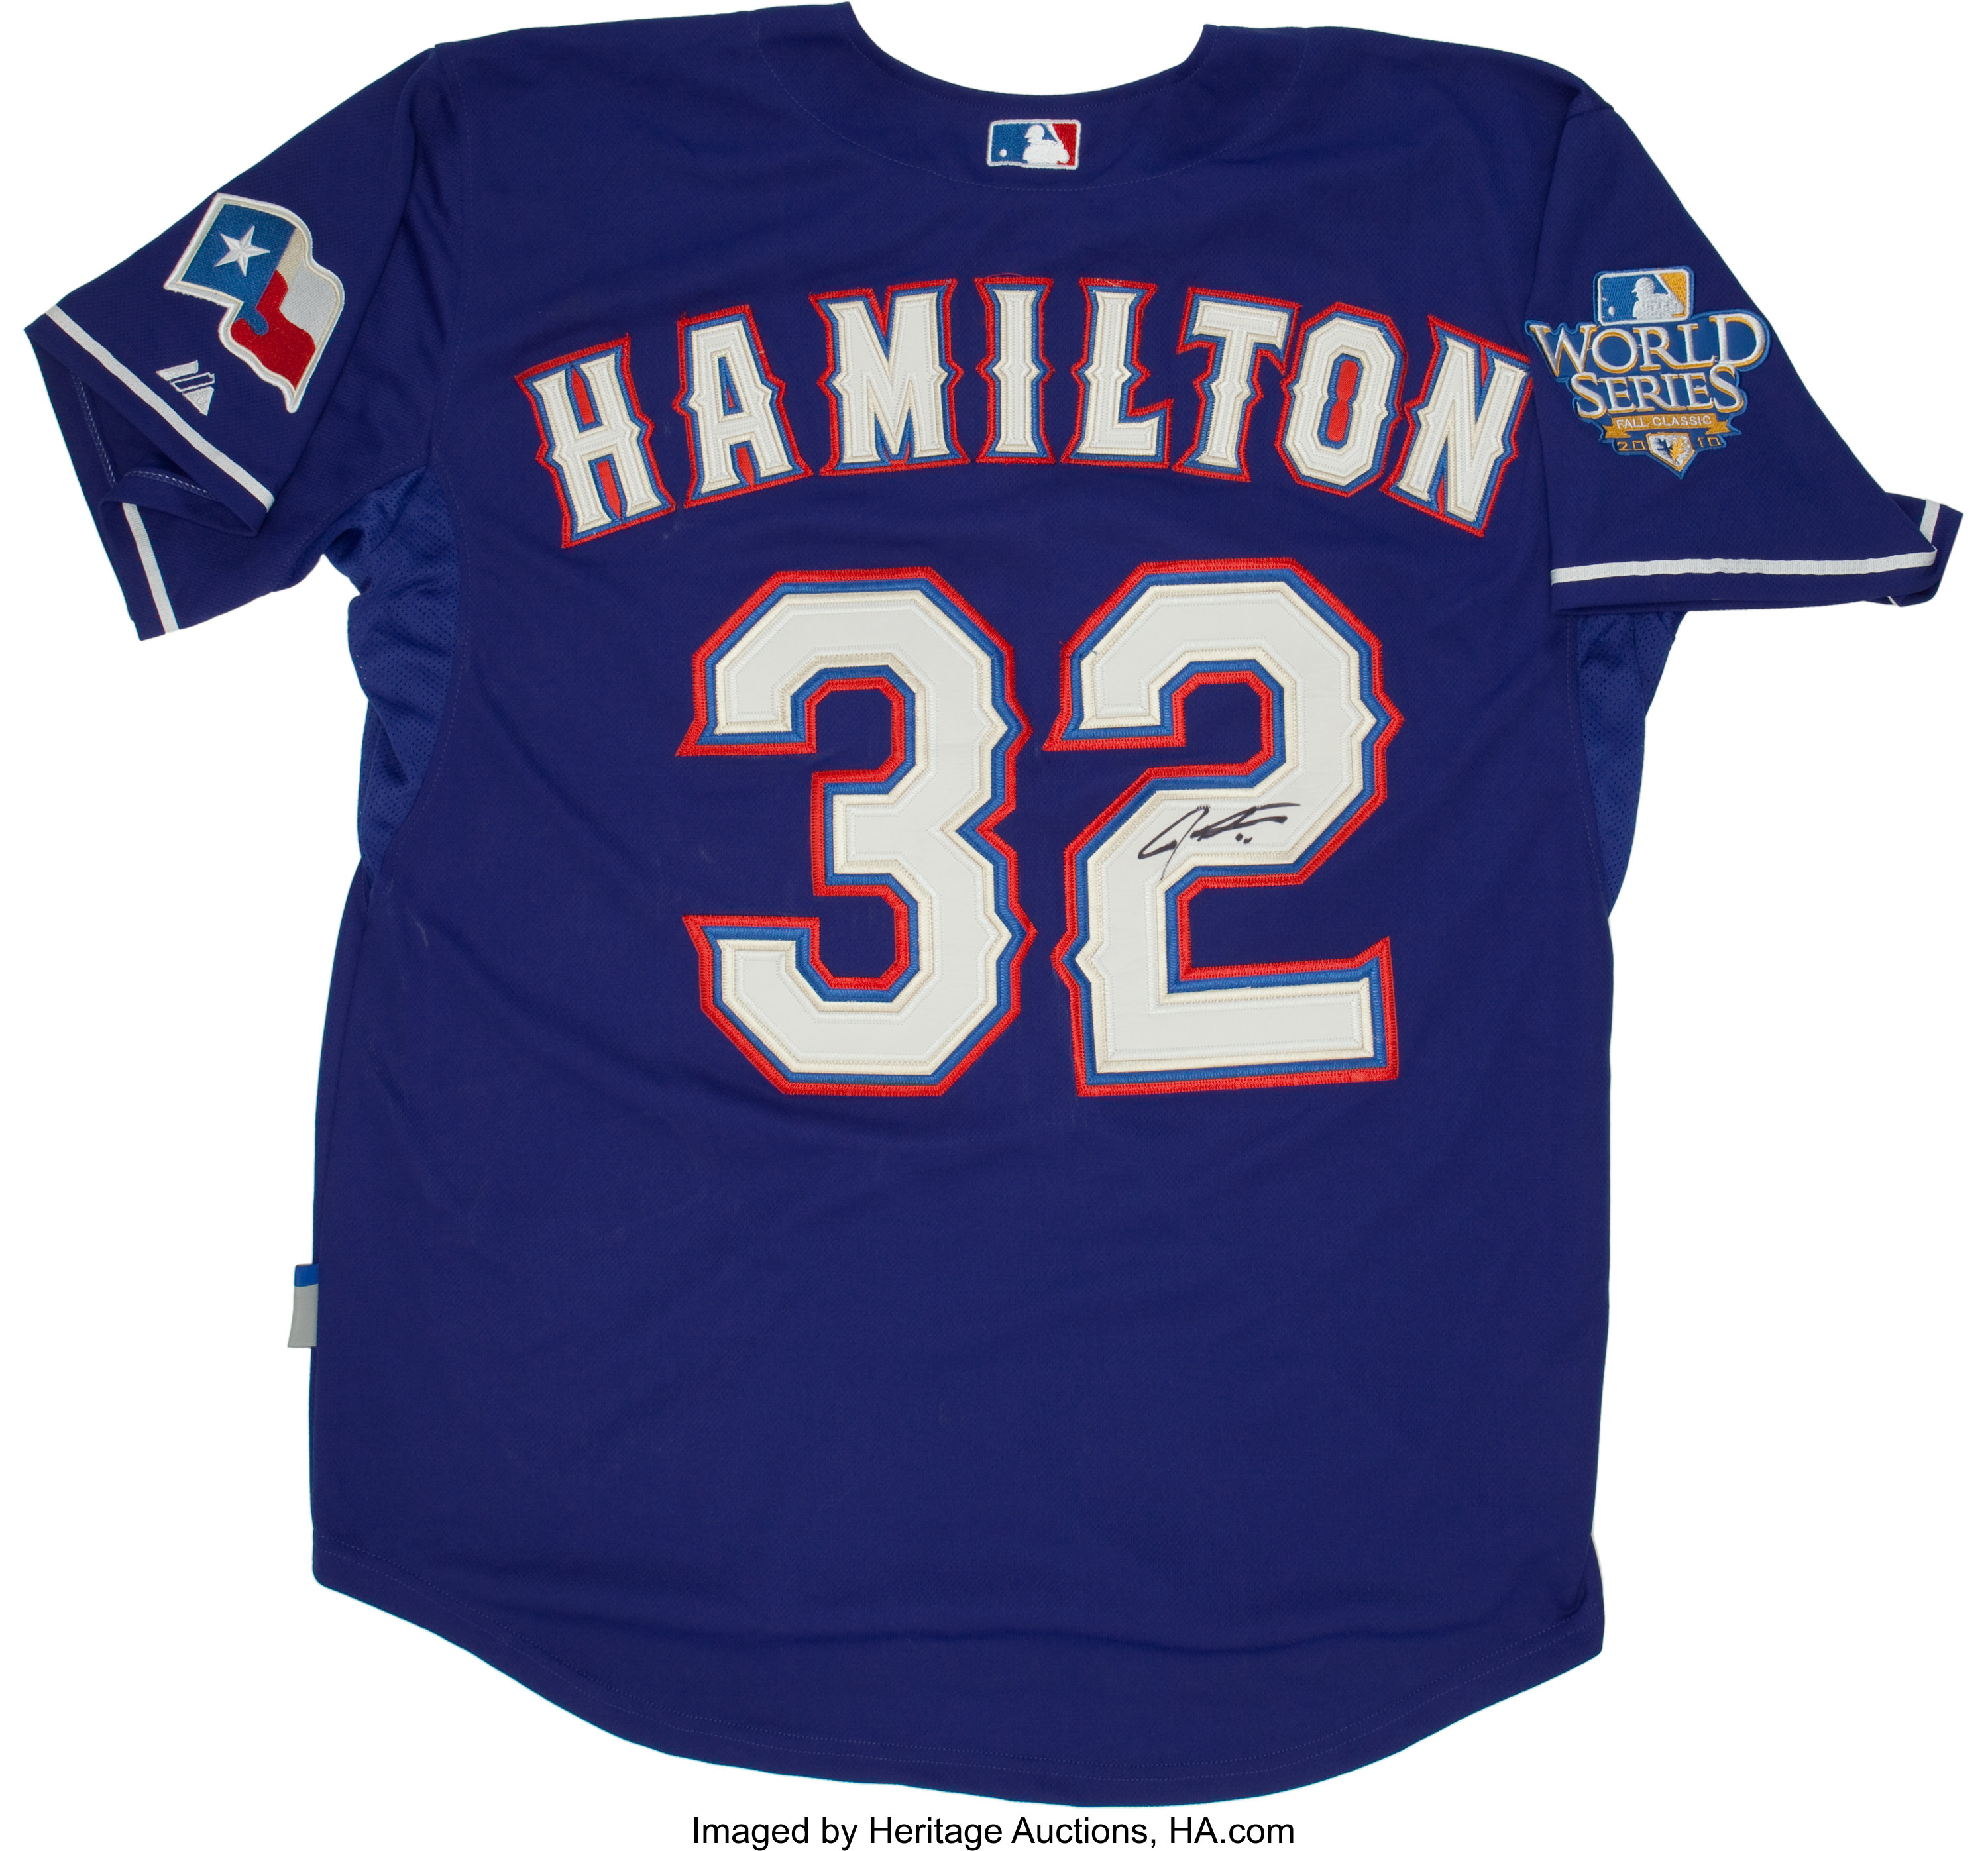 Josh Hamilton Signed Jersey. Baseball Collectibles Uniforms, Lot #42125